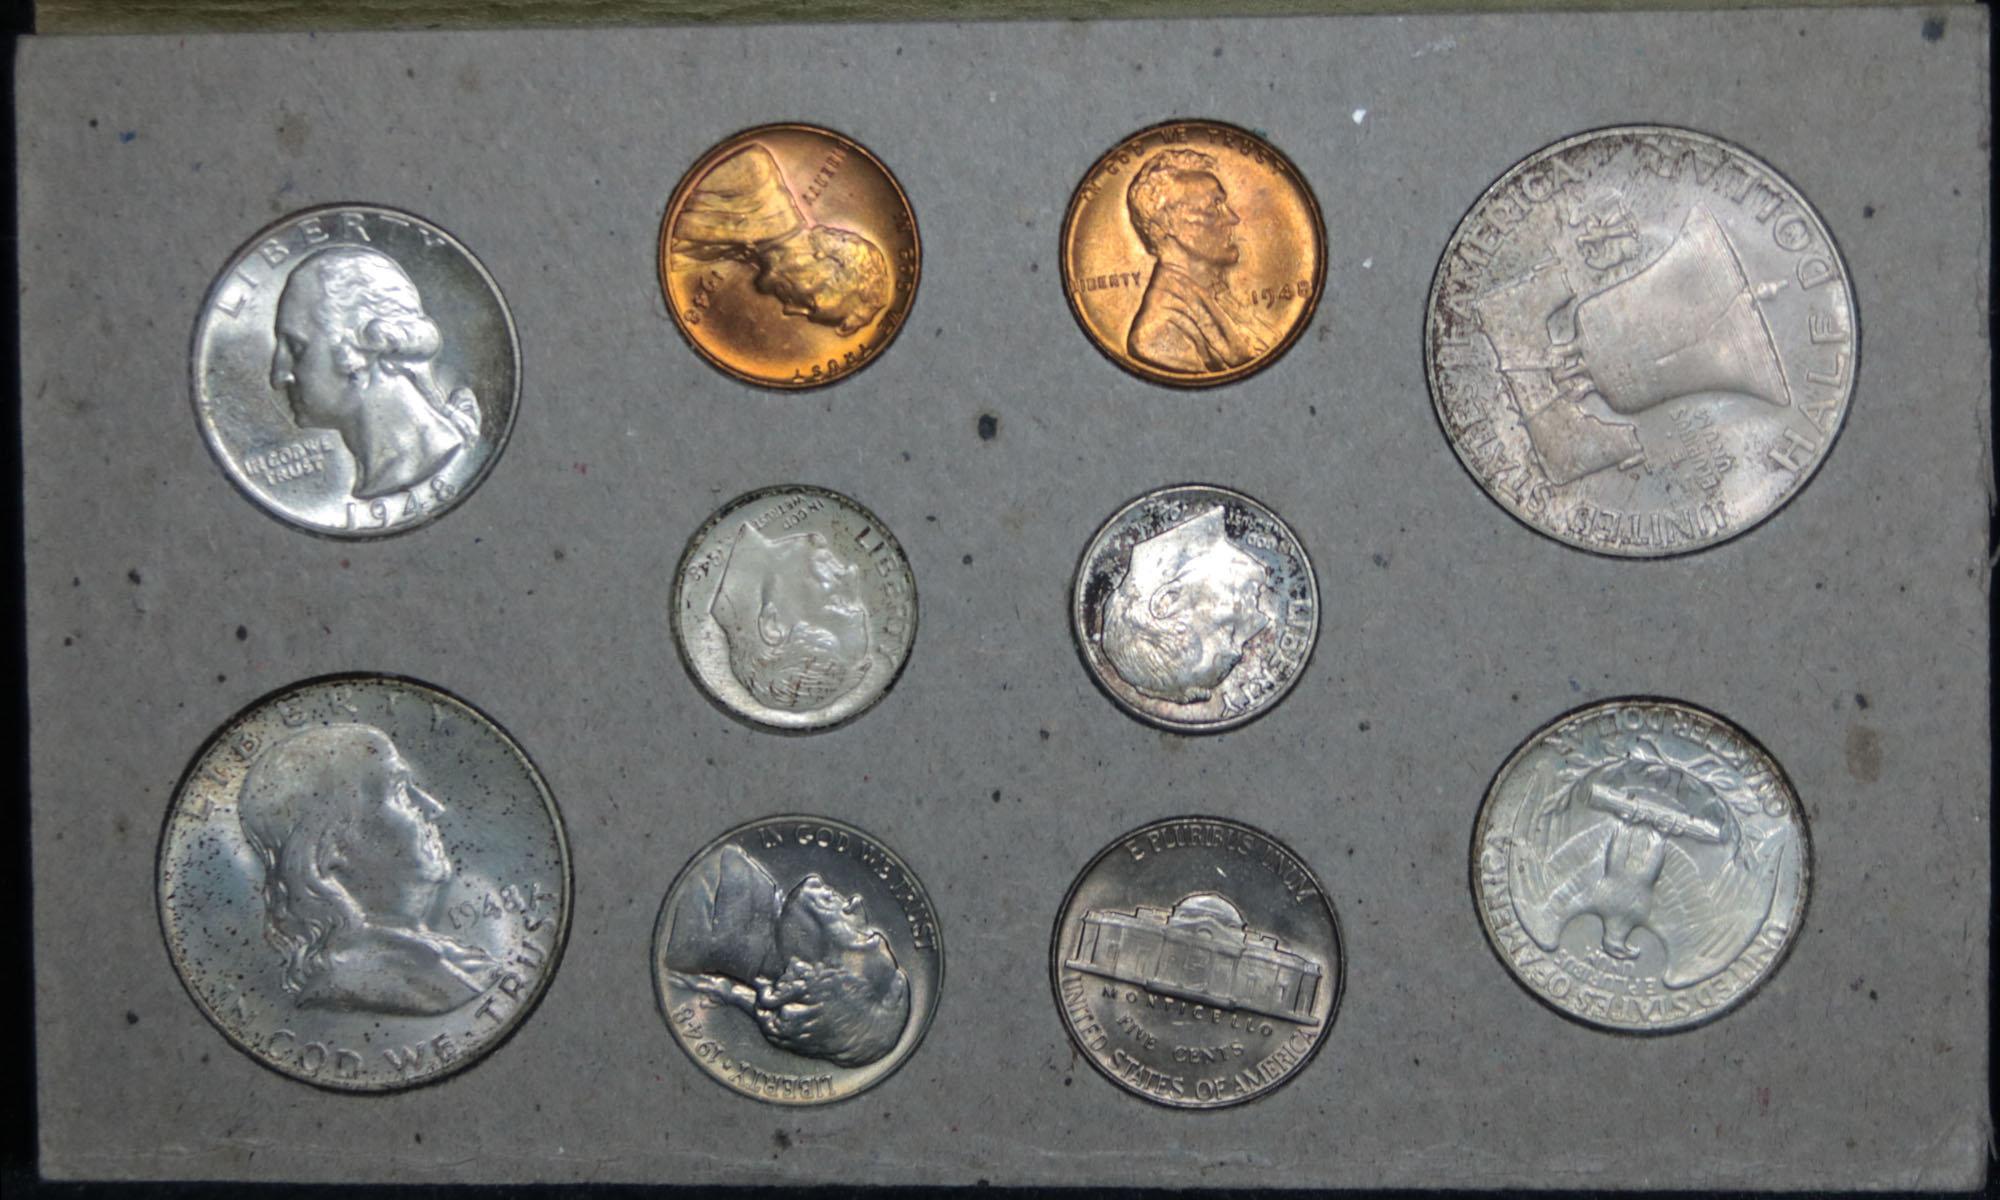 ***Auction Highlight*** Original 1948 United States Mint Set